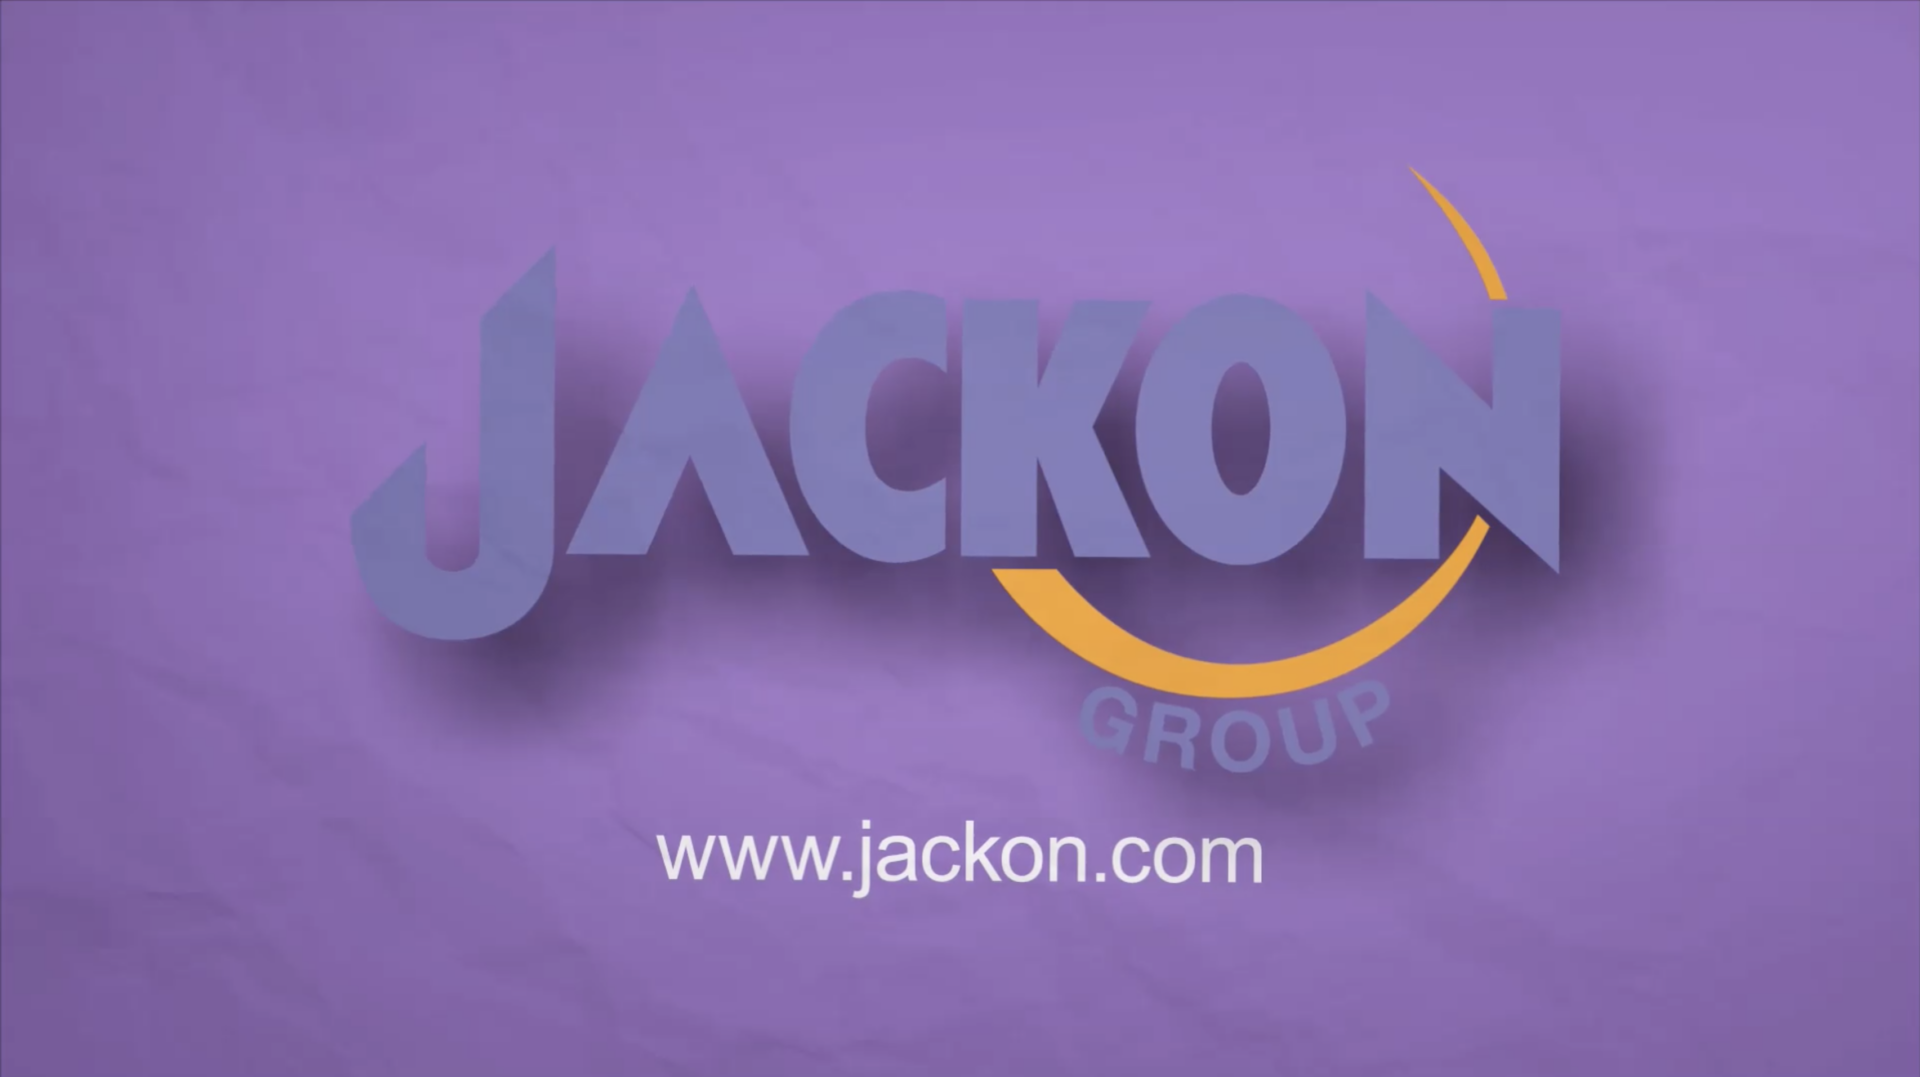 The Jackon Group